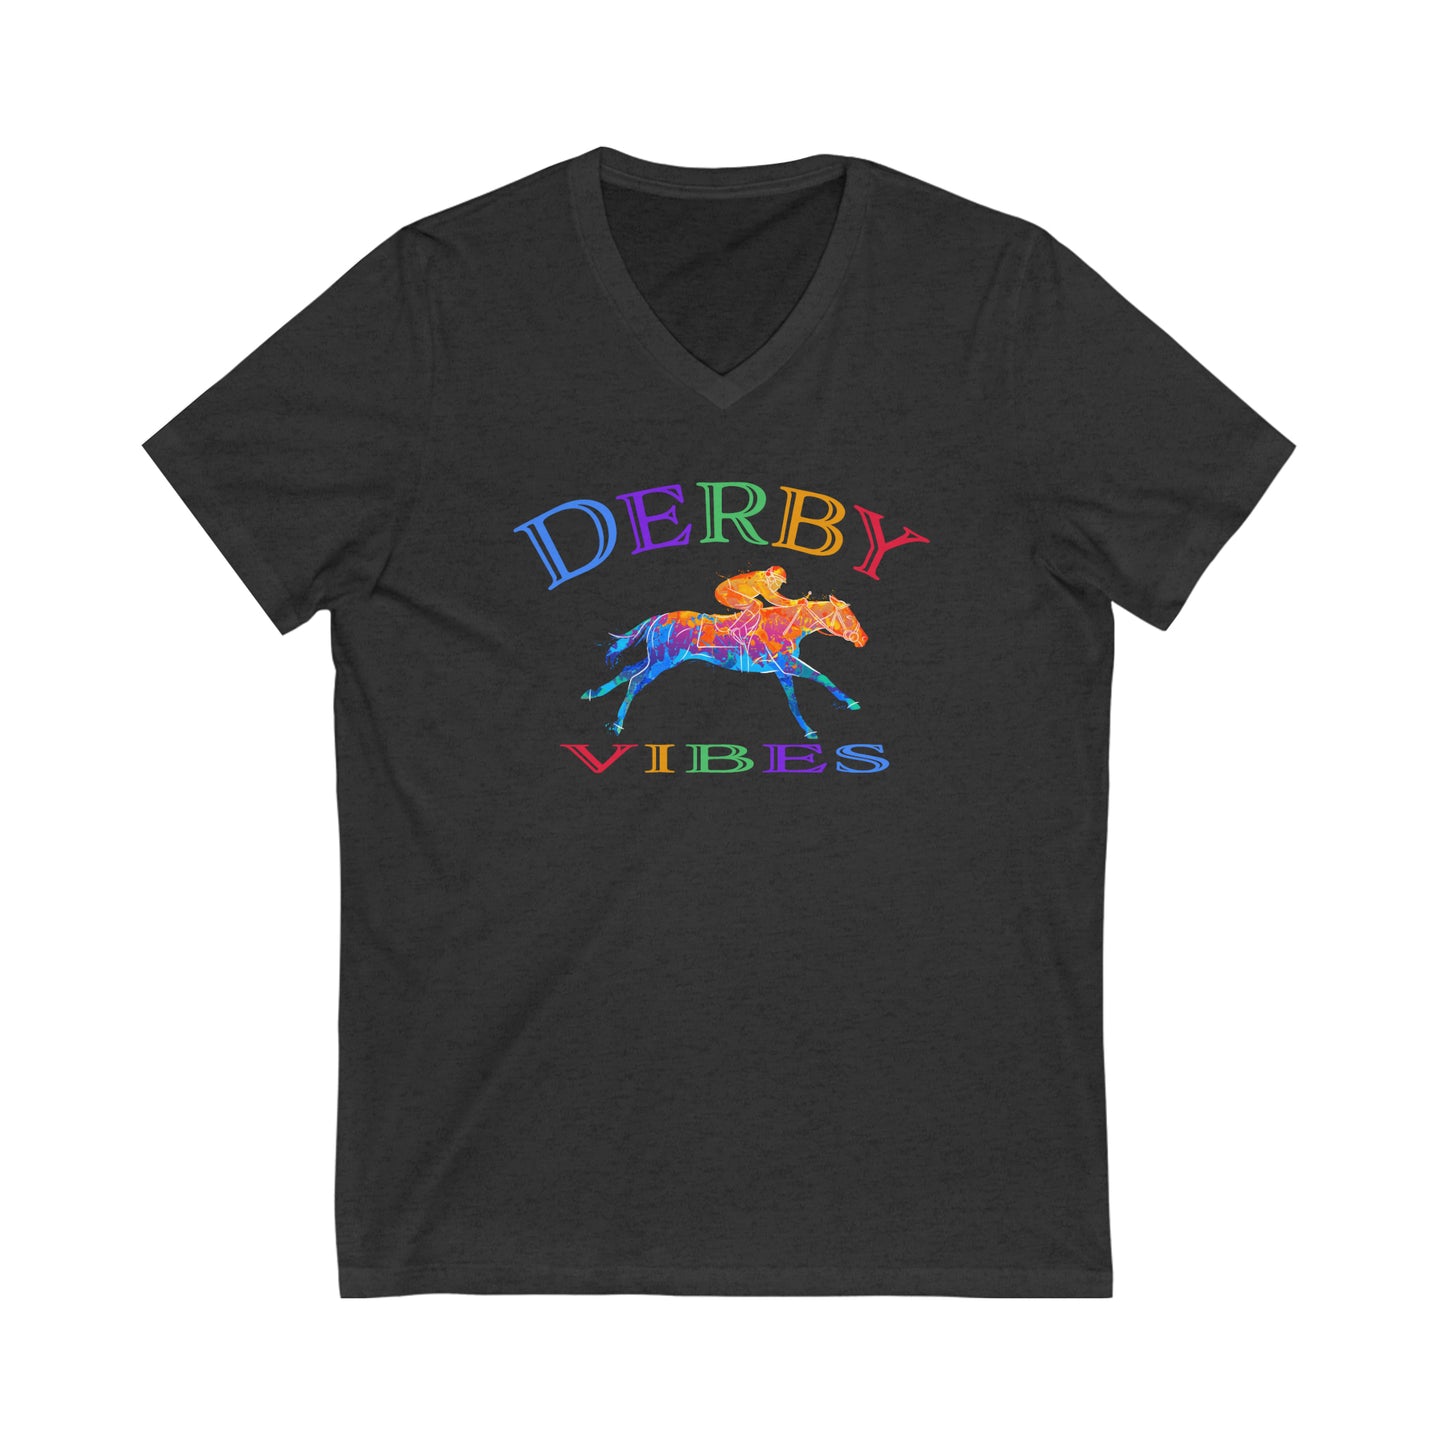 Derby Vibes T-Shirt For Kentucky Derby T Shirt For Derby Day TShirt For Horse Racing Shirt For Jockey T-Shirt For Racehorse Tee